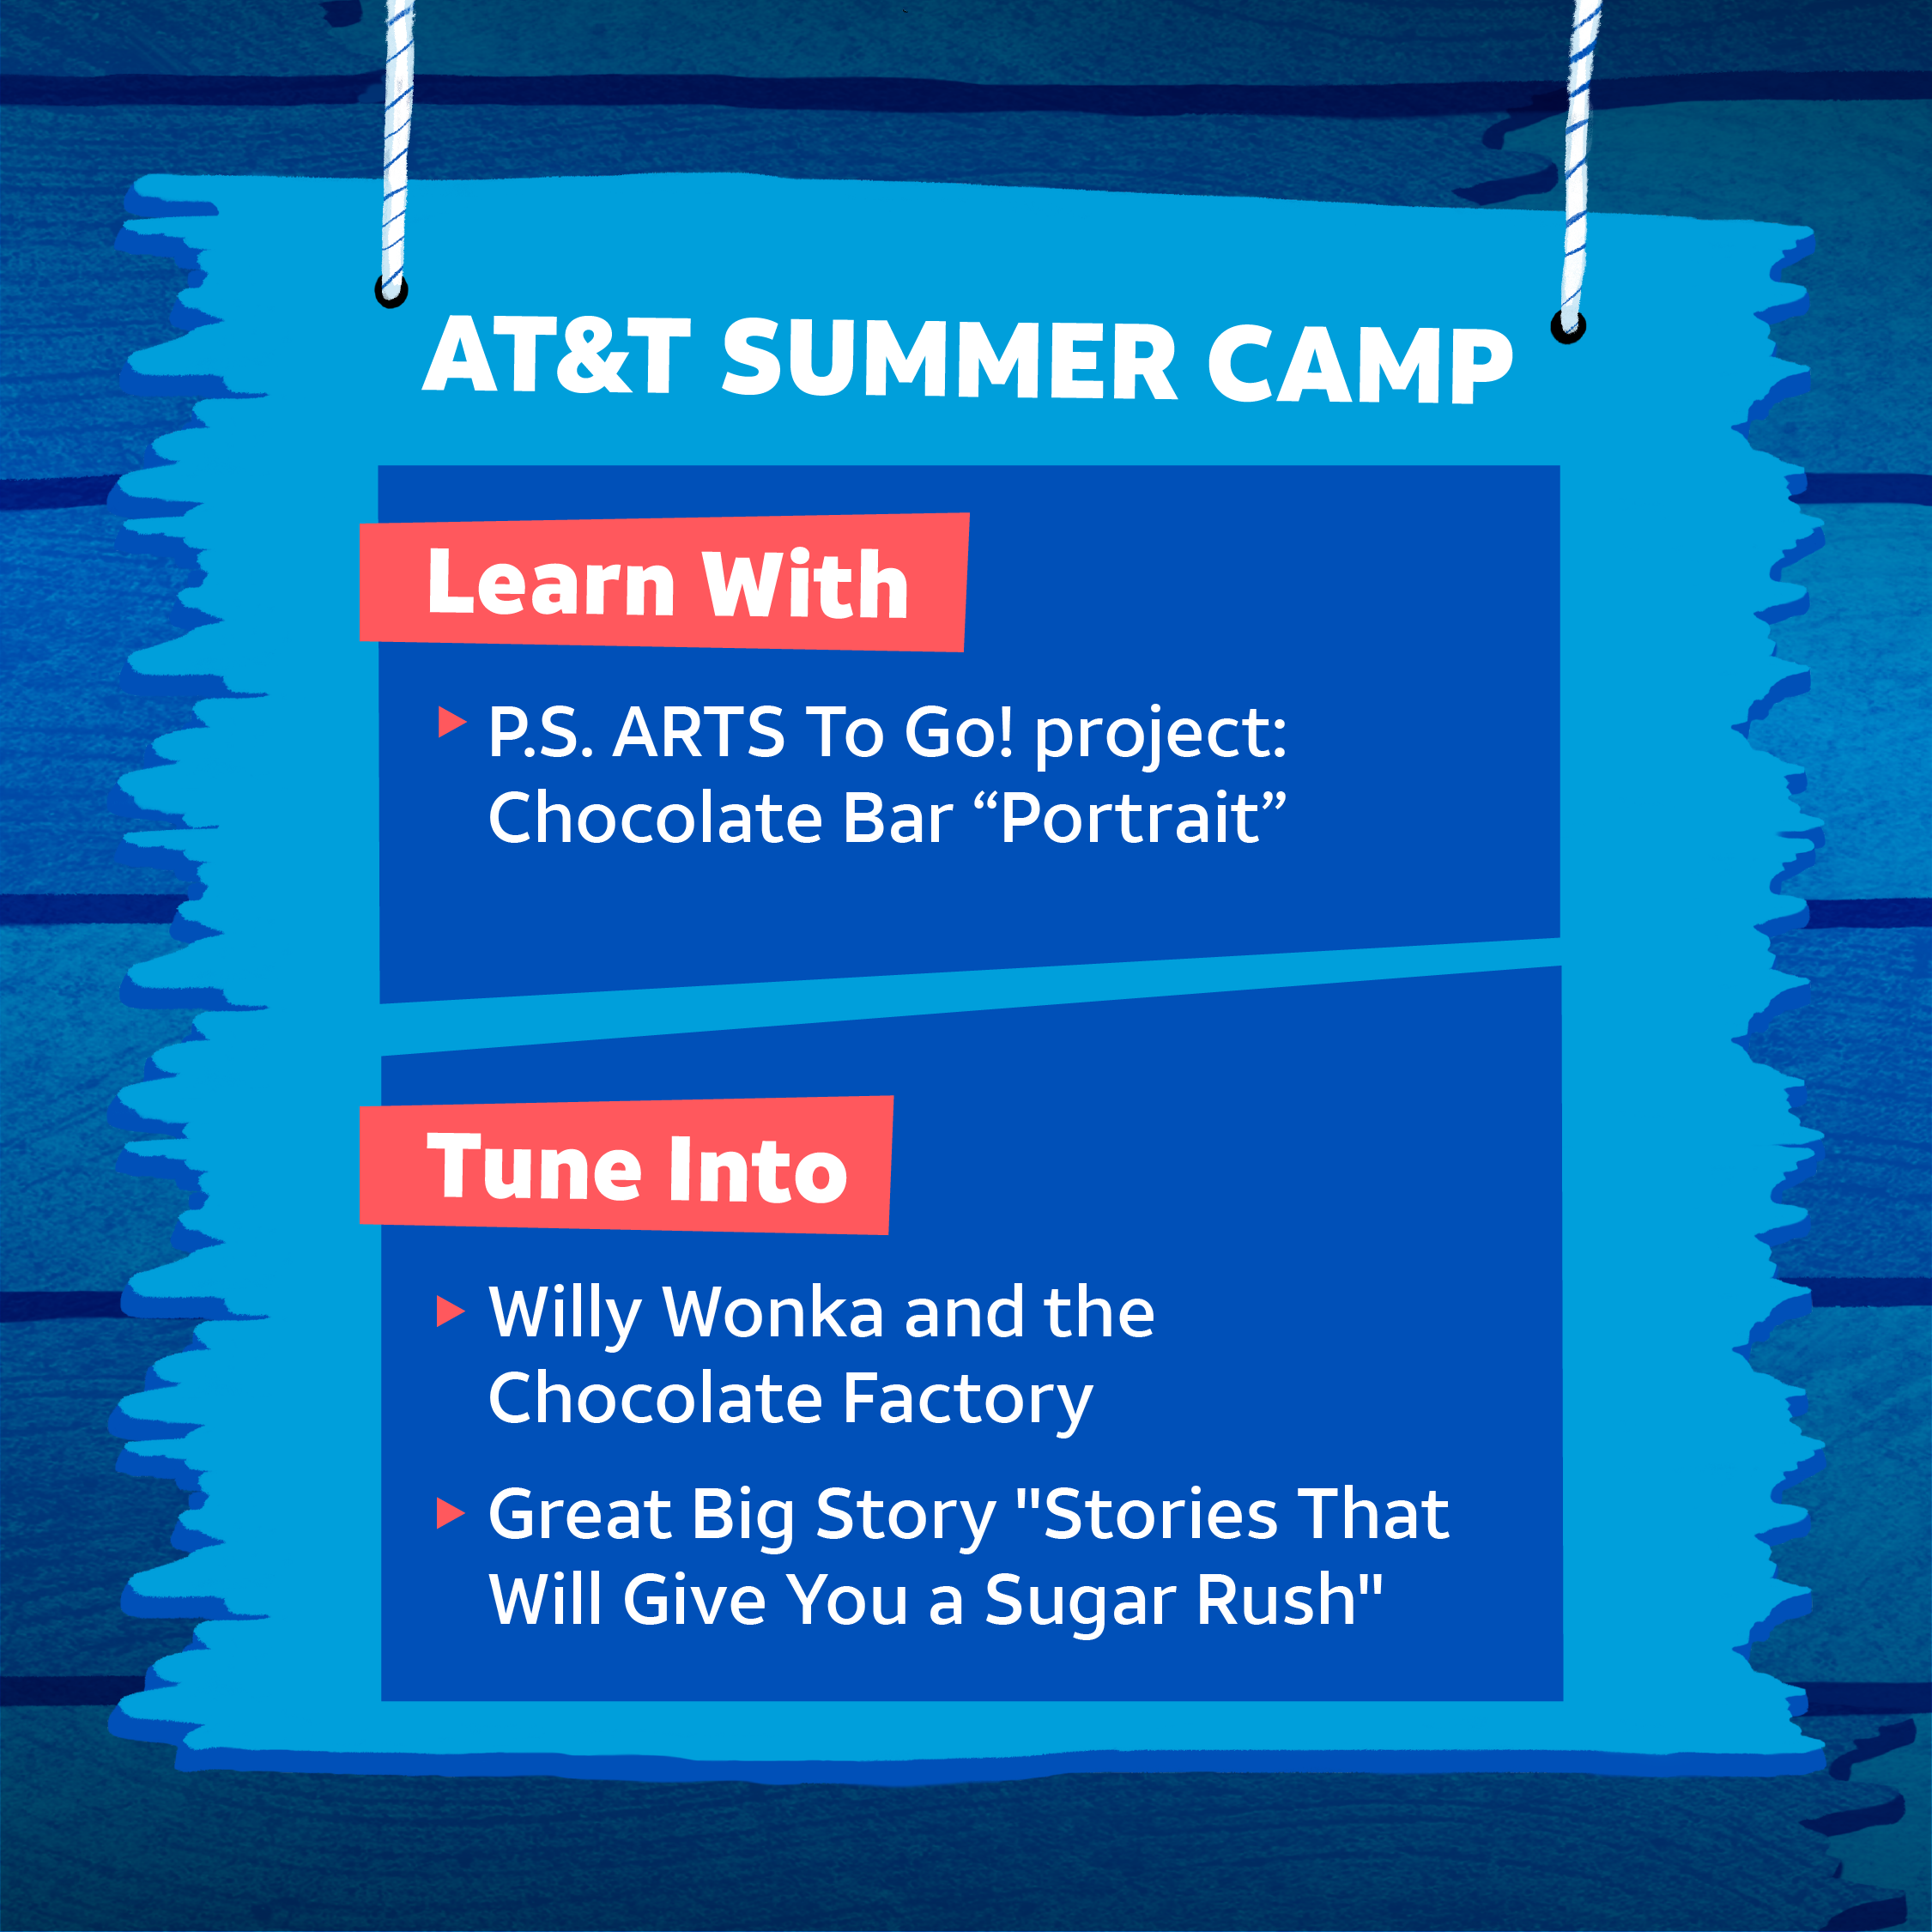 ATT-SummerCamp_v11_Schedule 2.png